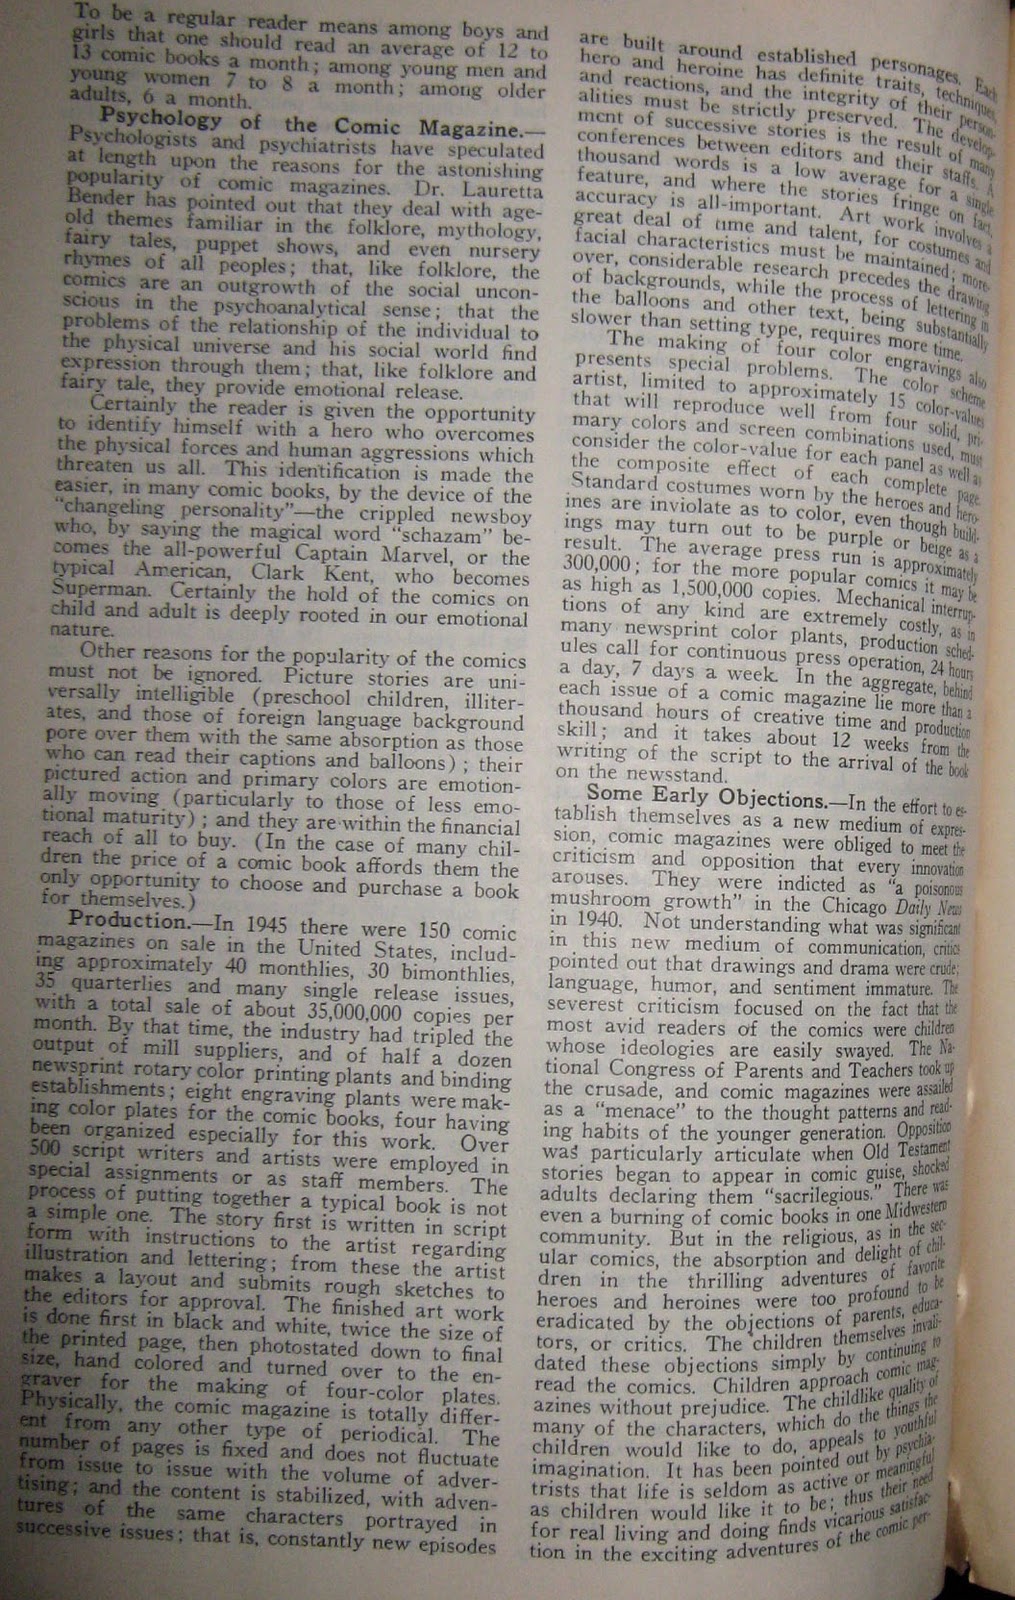 encyclopedia americana 1958 edition